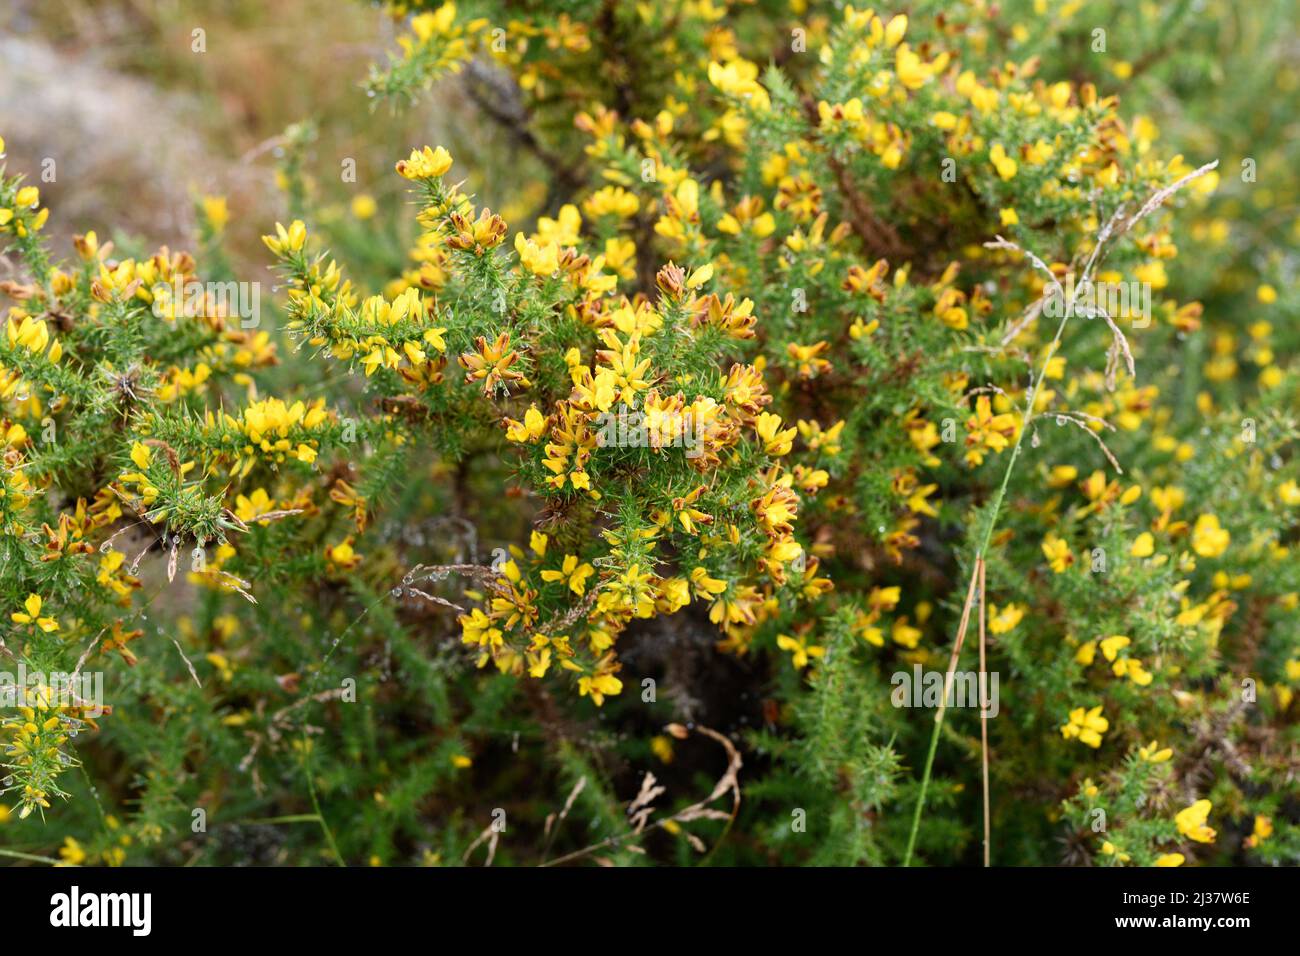 Gorse (Ulex europaeus) is a spiny shrub native to western Europe (Atlantic coasts). This photo was taken in Vilarinho Seco, Portugal. Stock Photo